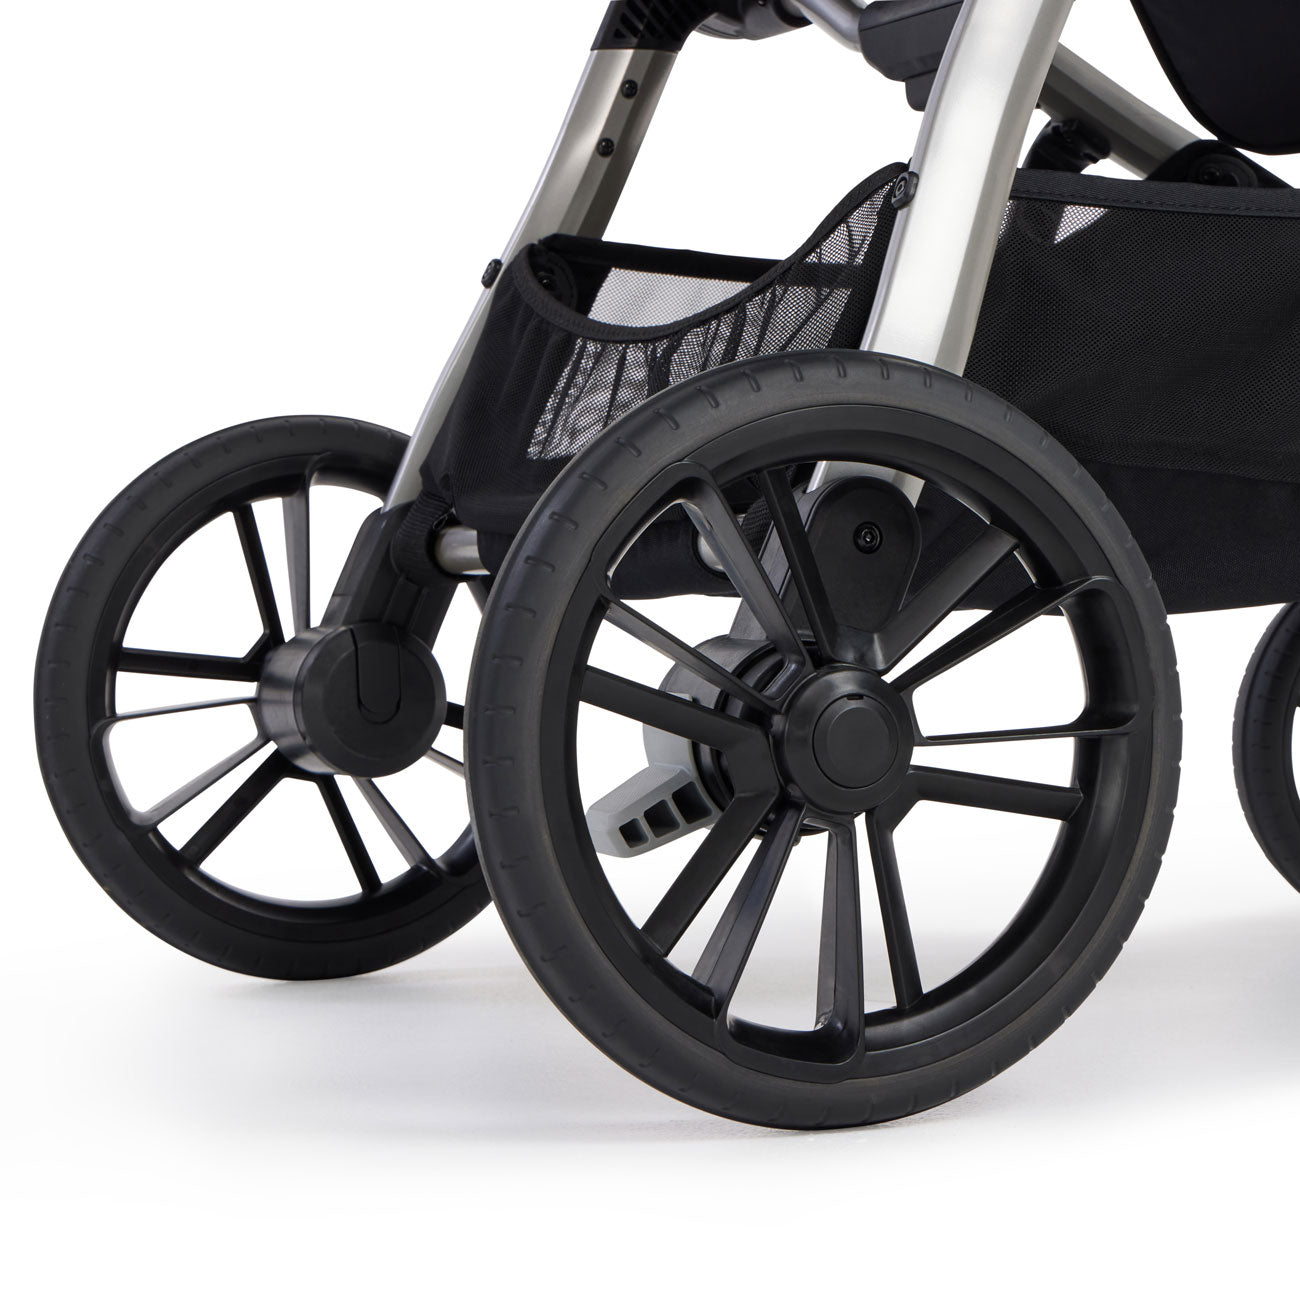 Baby Jogger City Sights Stroller Wheels